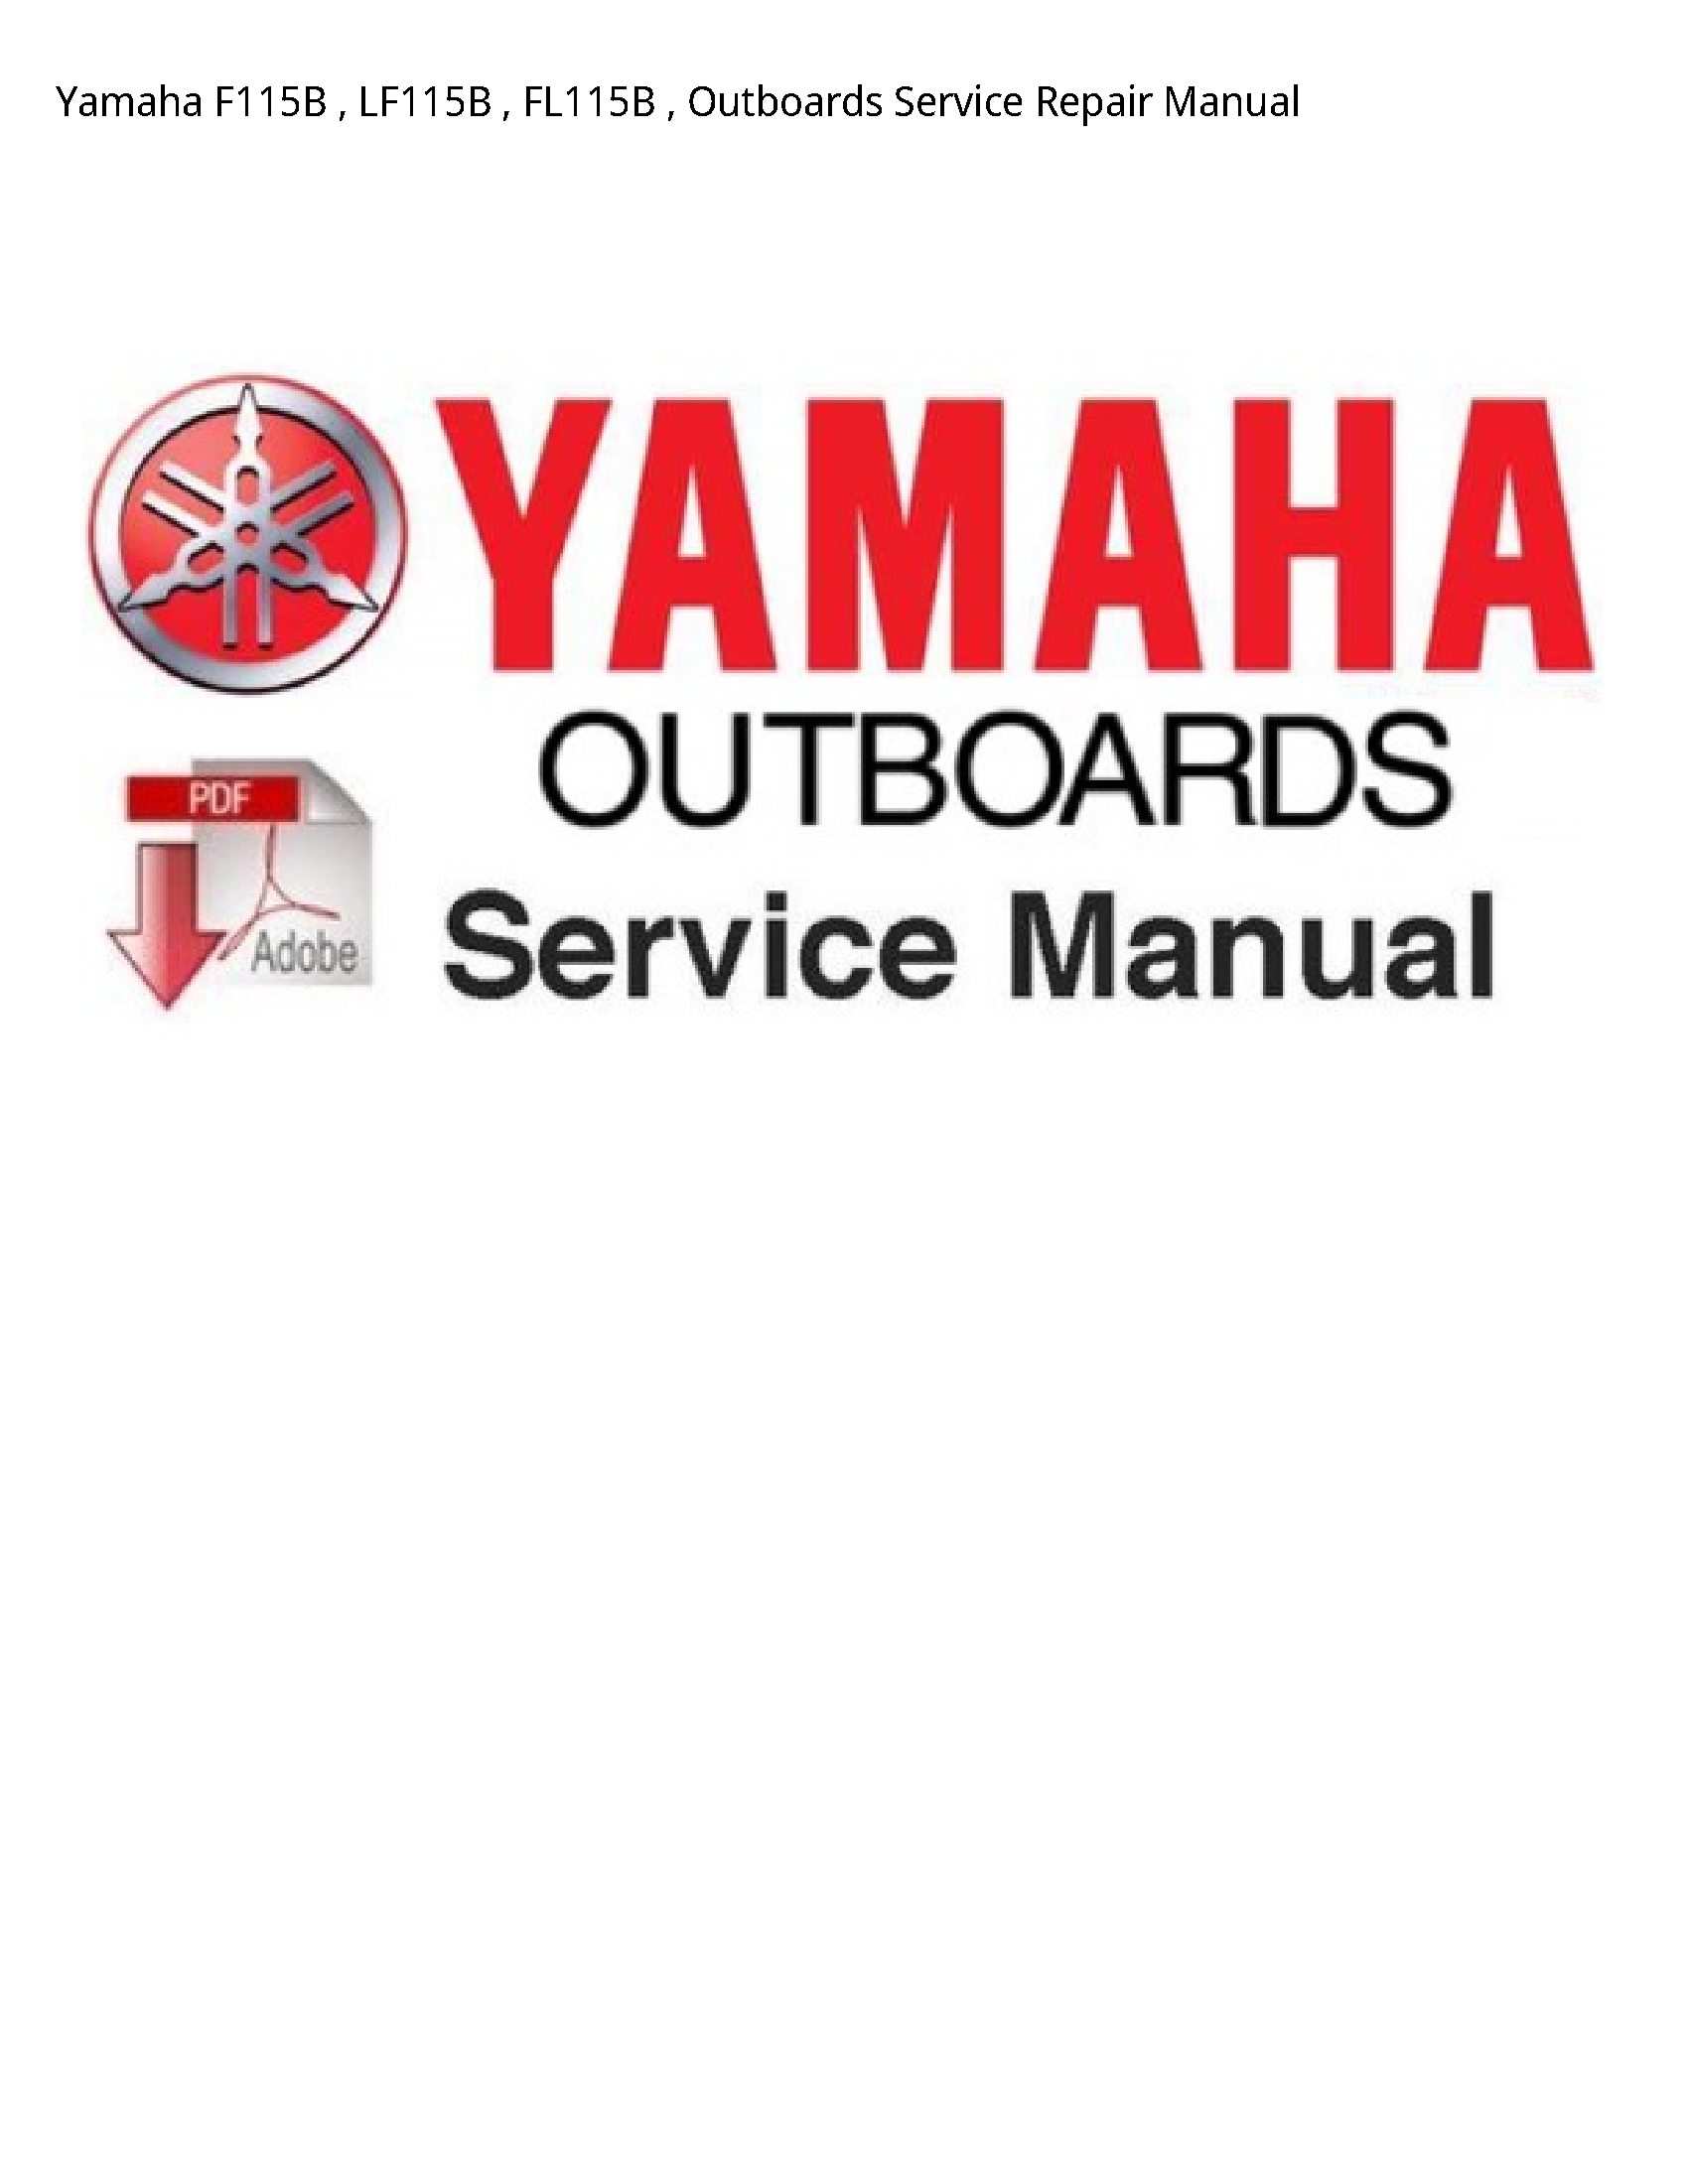 Yamaha F115B Outboards manual